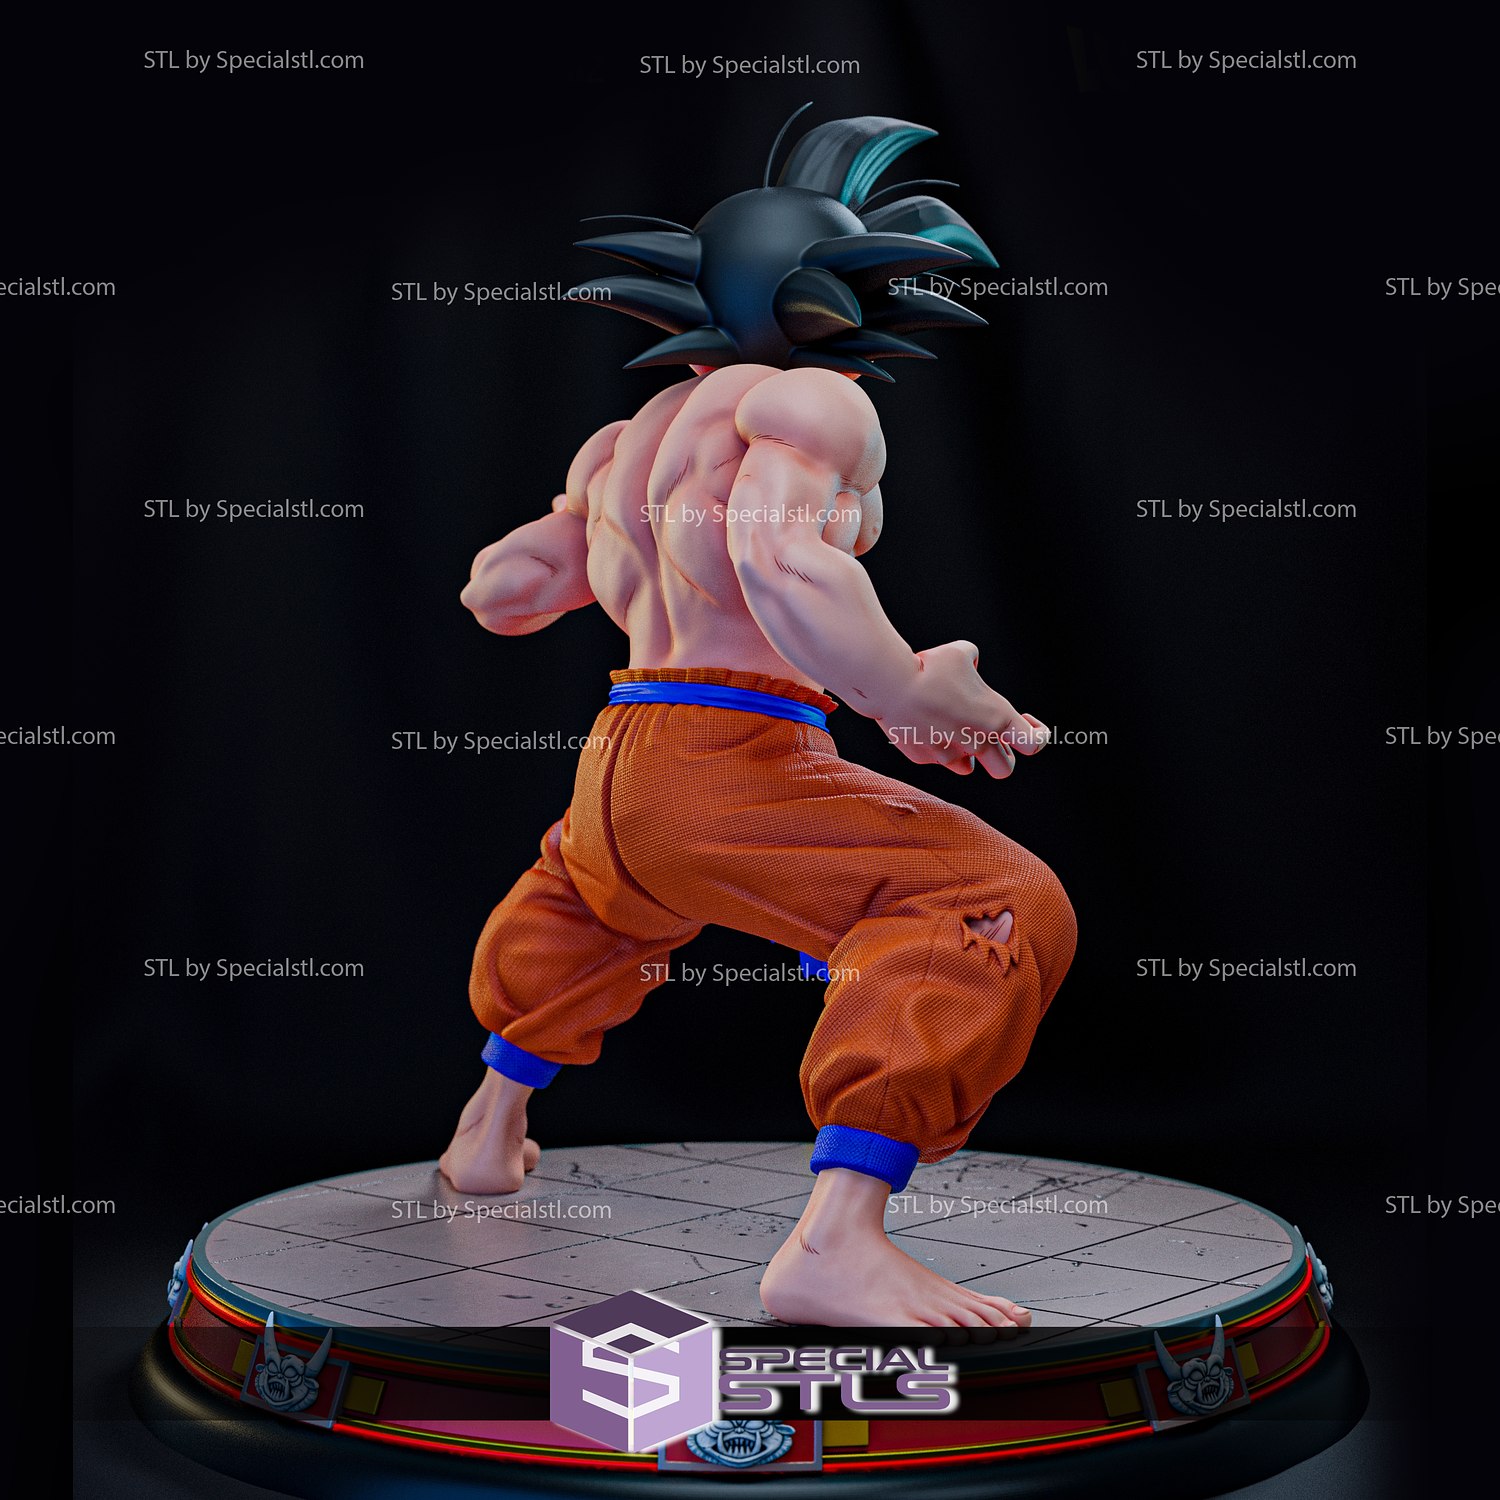 Dragon Ball Z Son Goku Training Figure